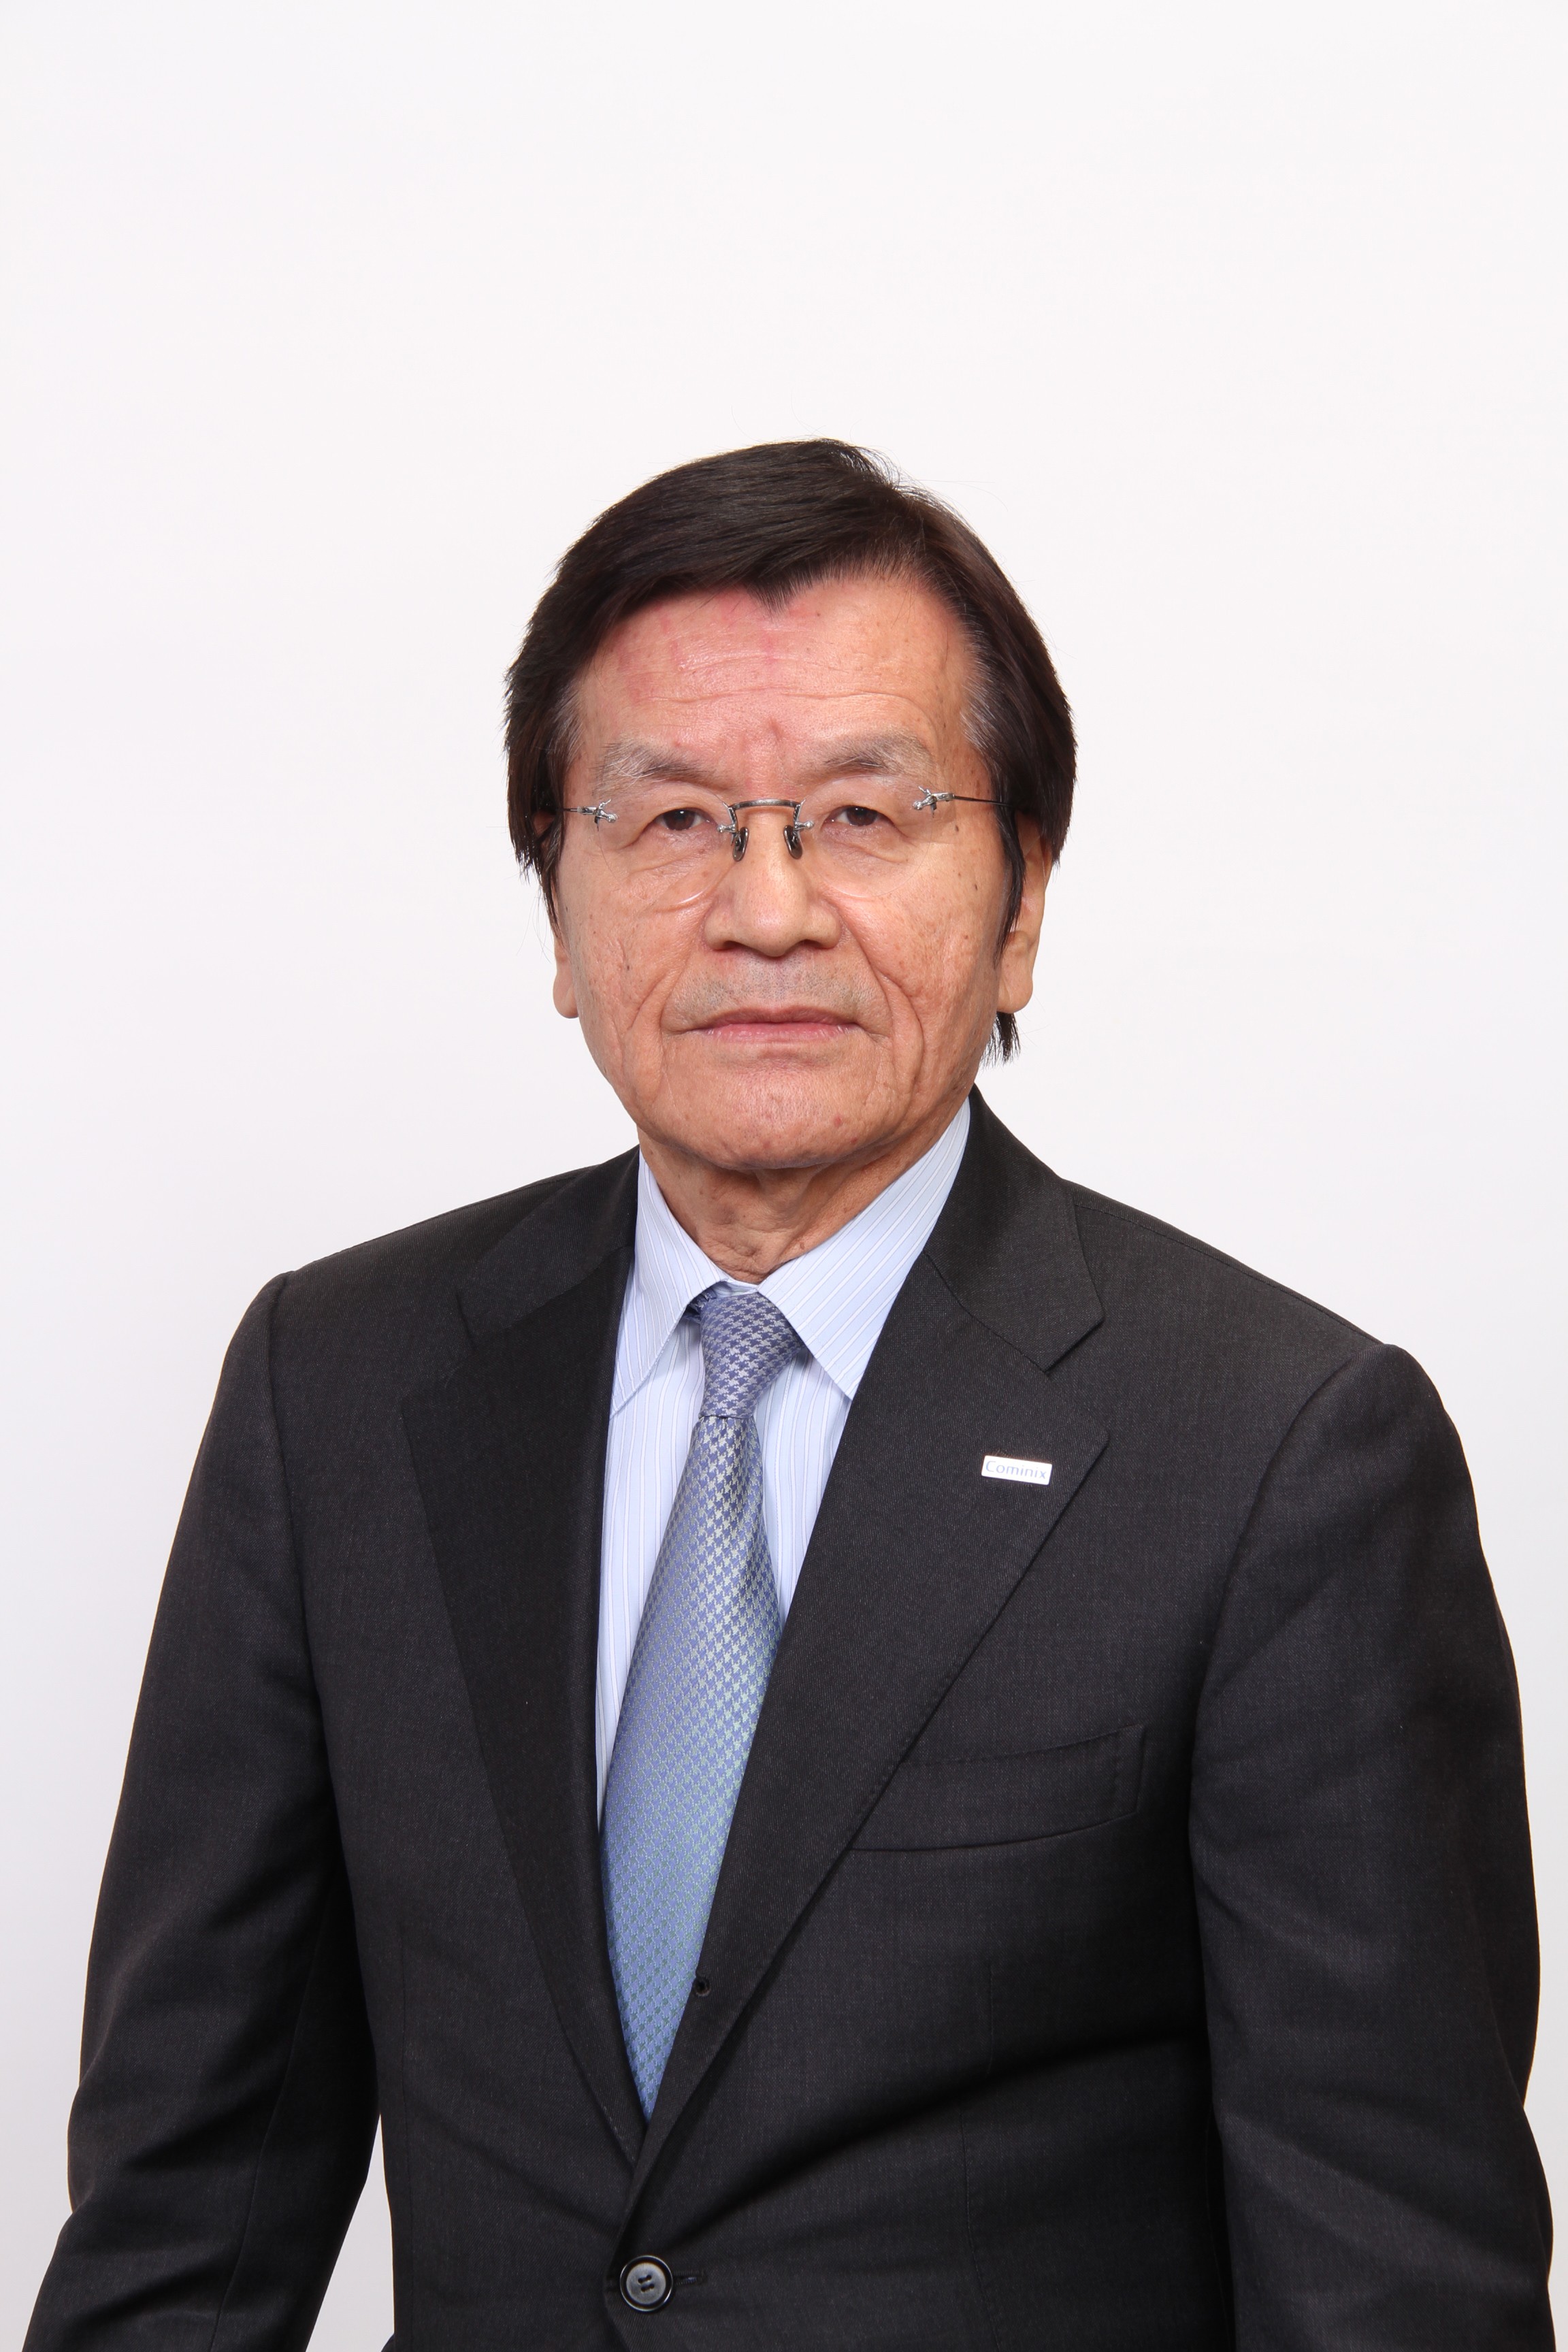 Shigemasa Yanagawa, president and representative director